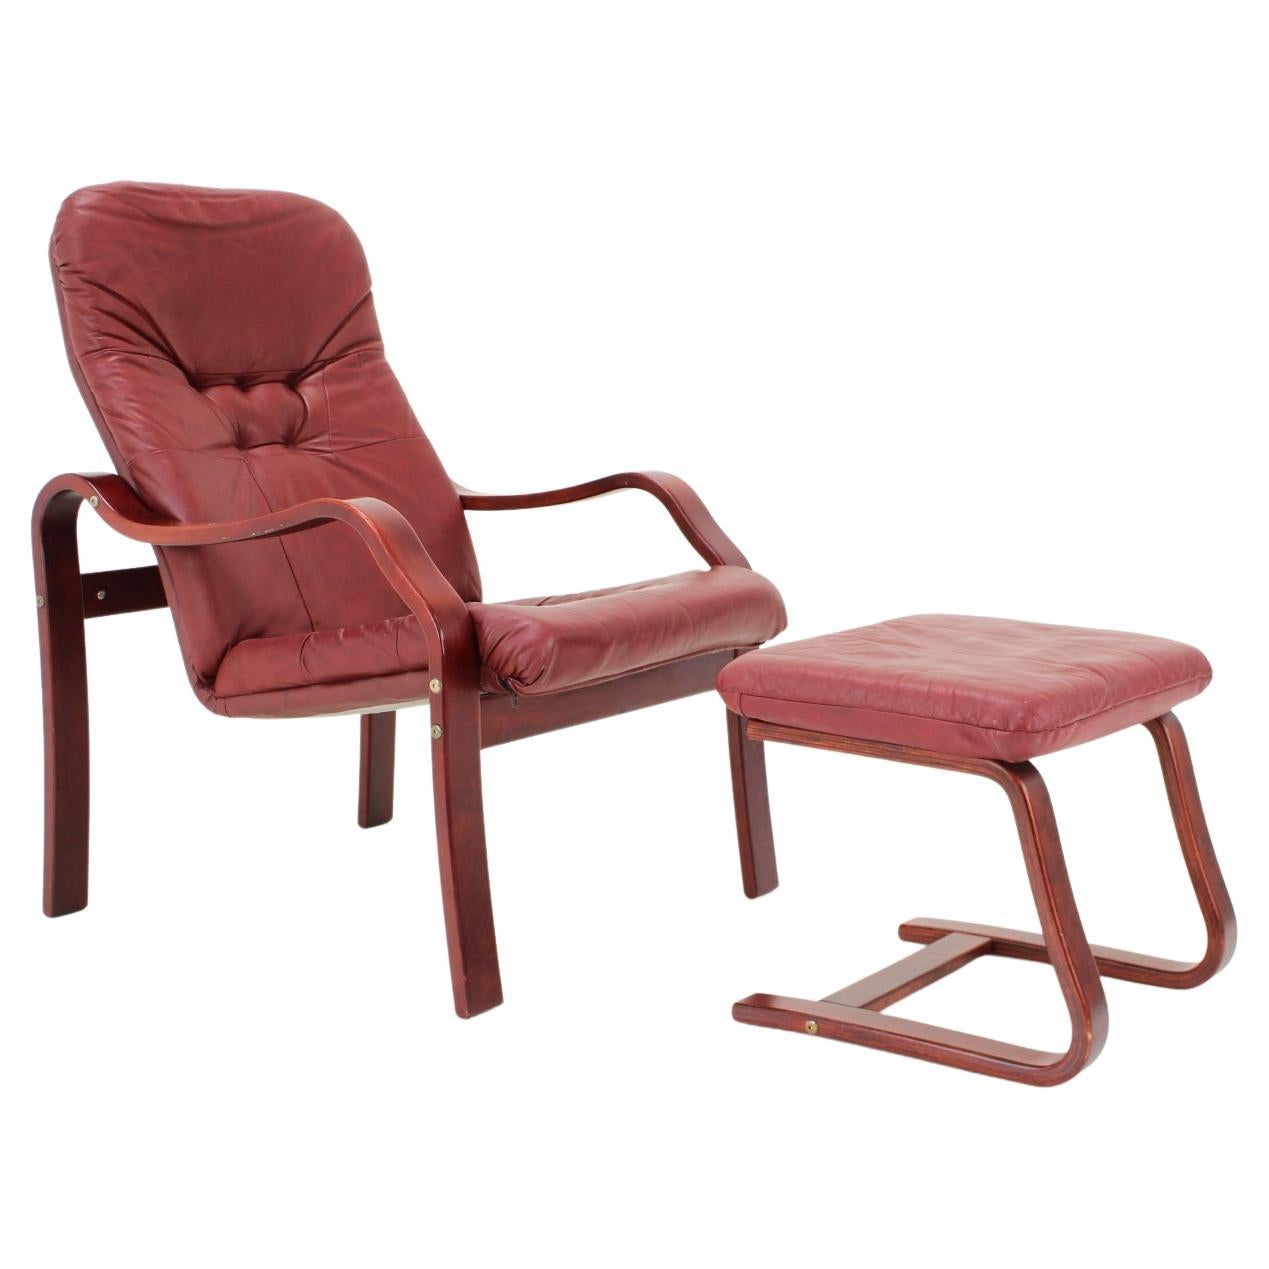 1980 Leather Armchair With Footrest, Ton Czechoslovakia For Sale